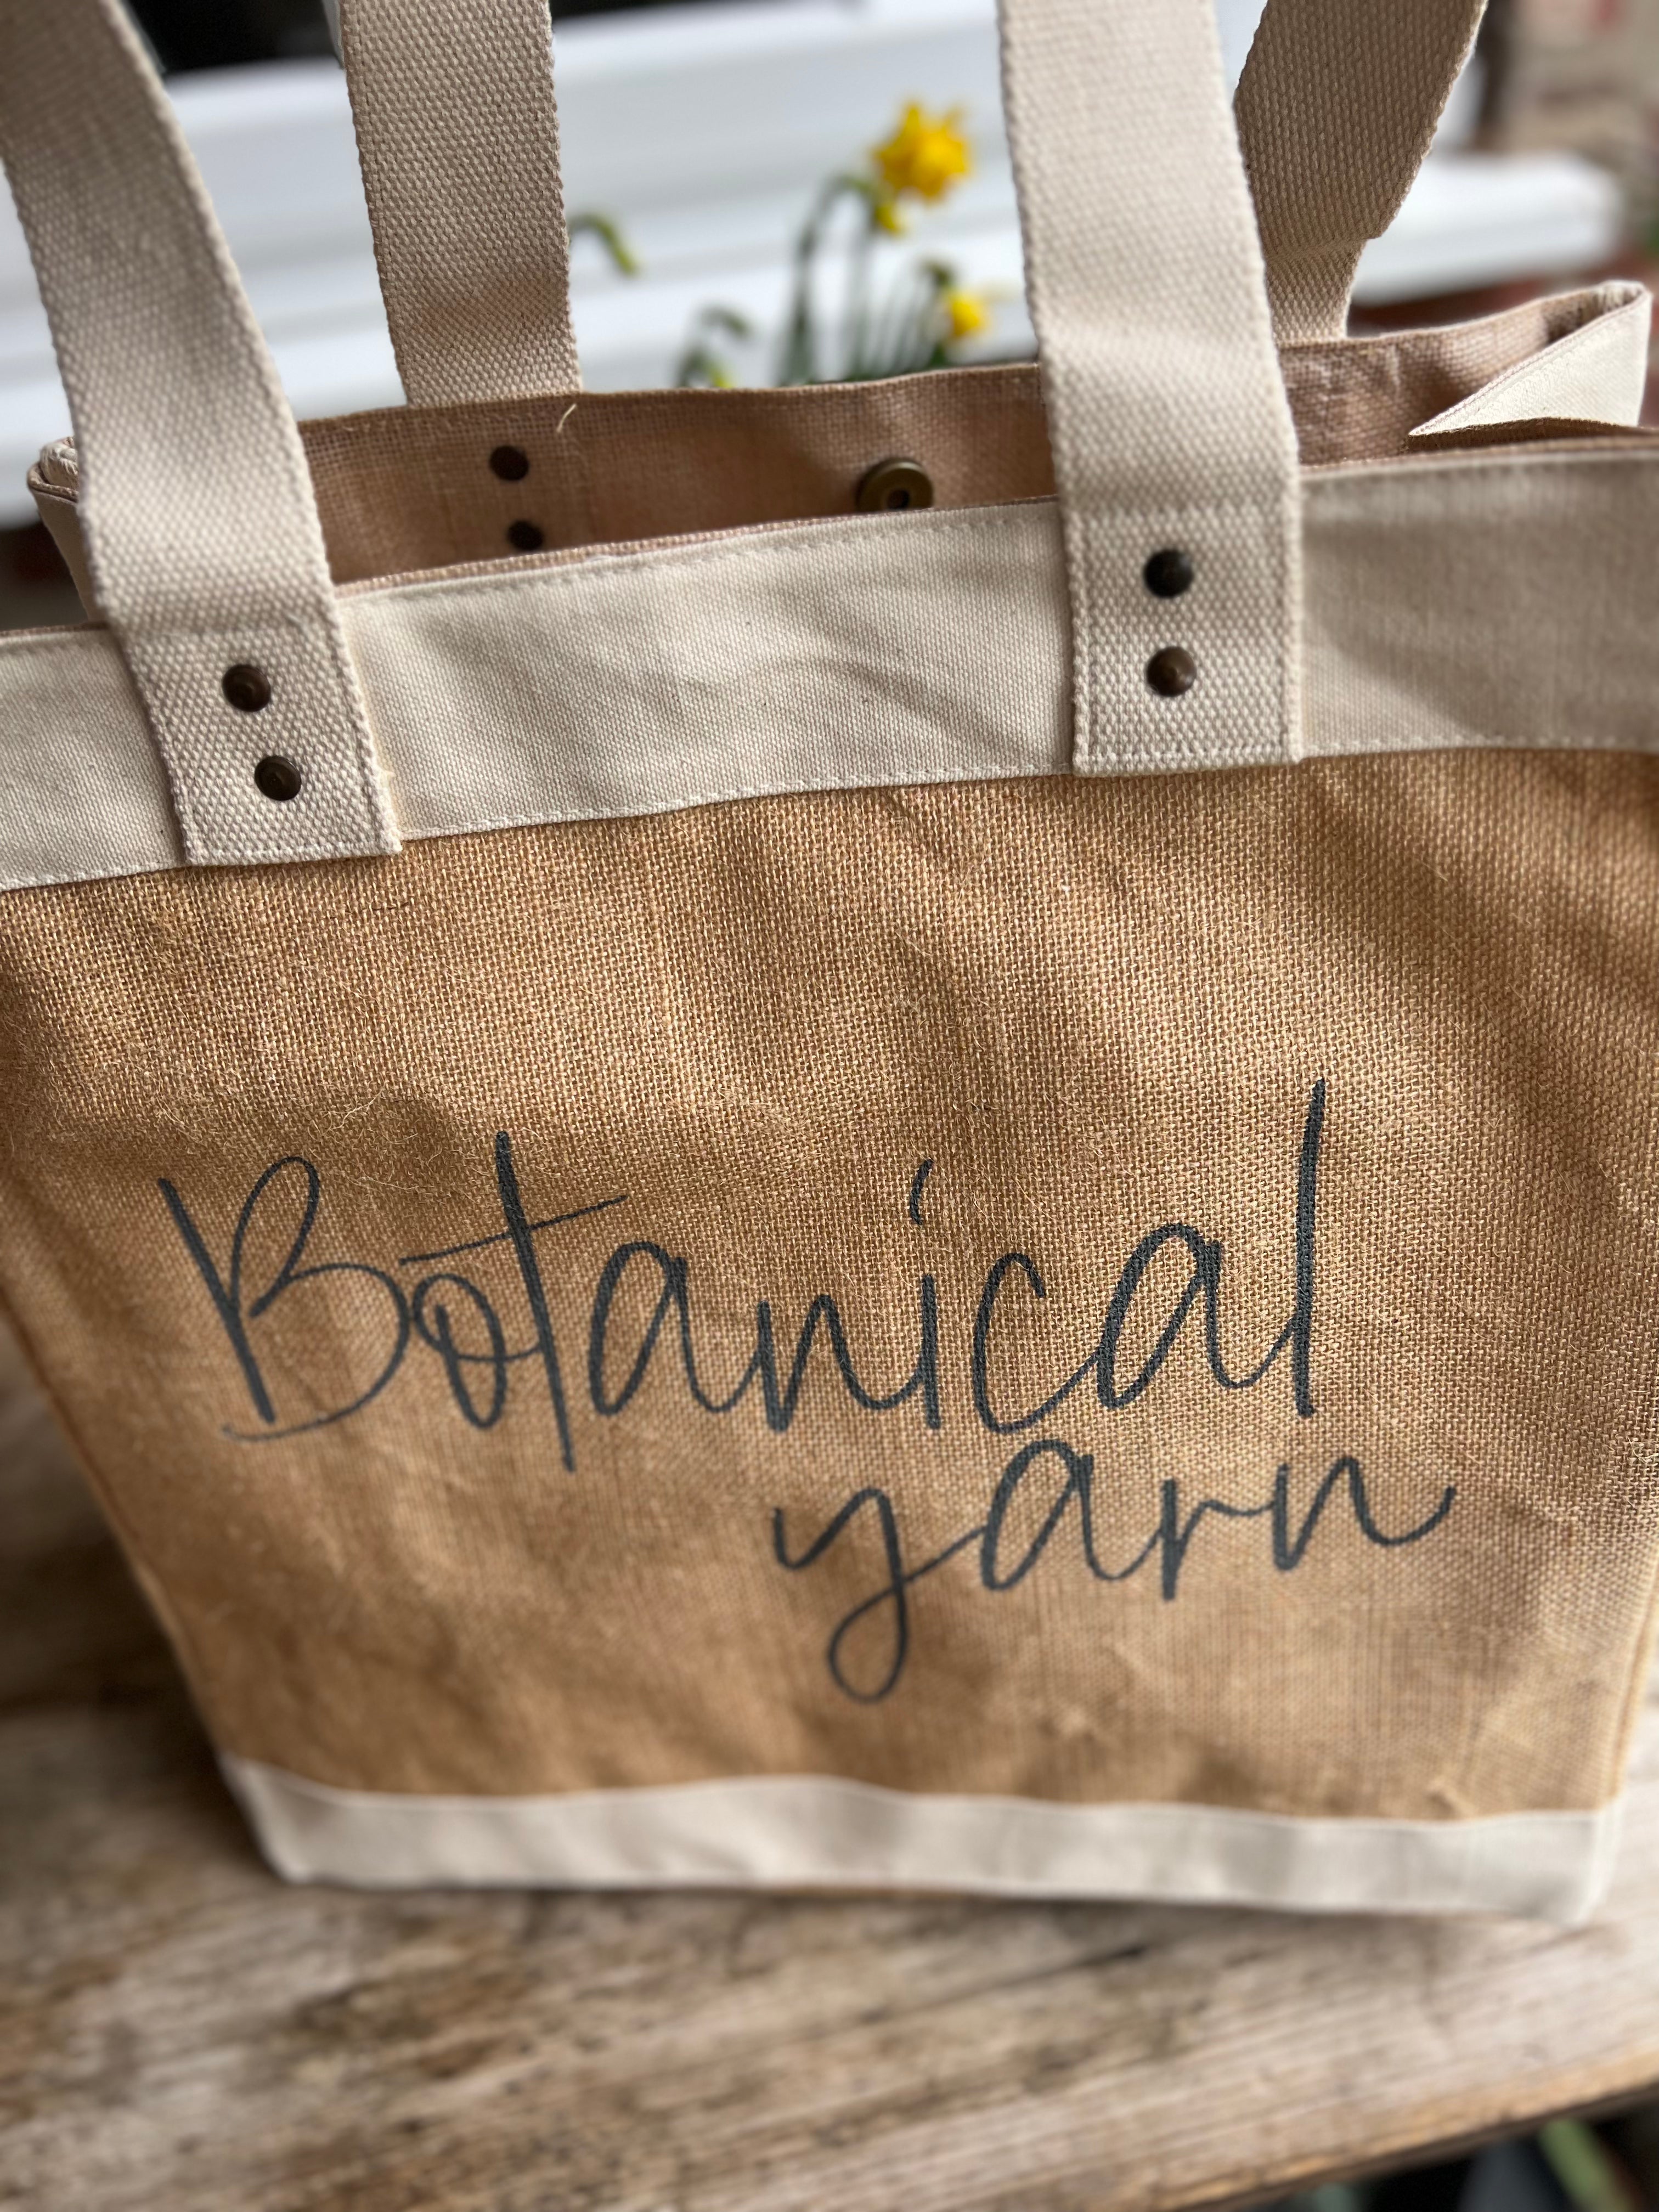 Botanical Yarn Large Jute Shopper Bag